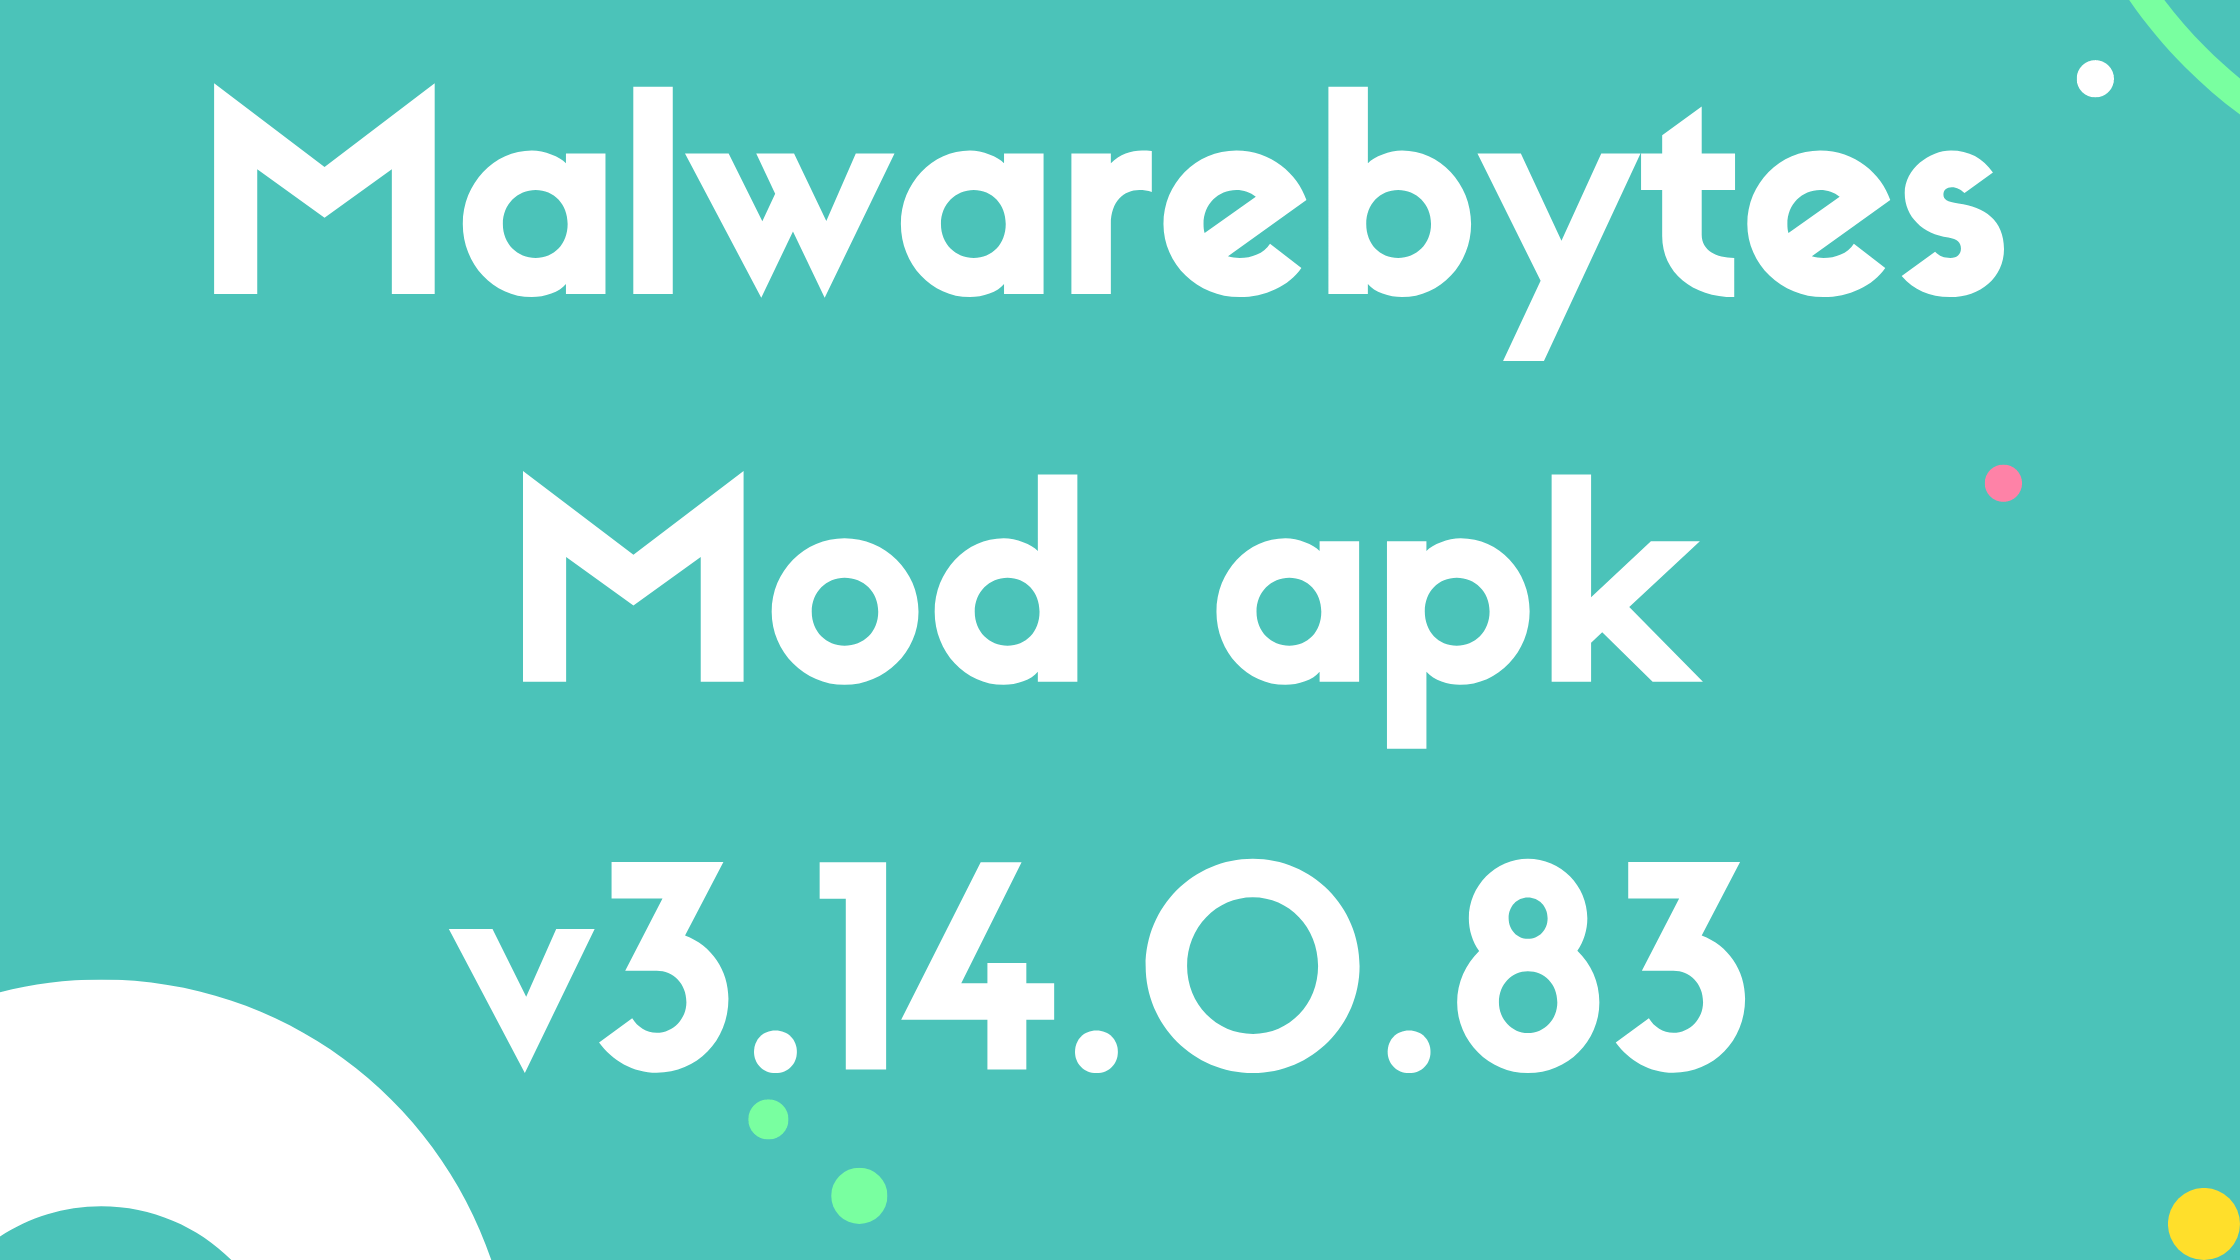 Malwarebytes Mod apk v3.14.0.83